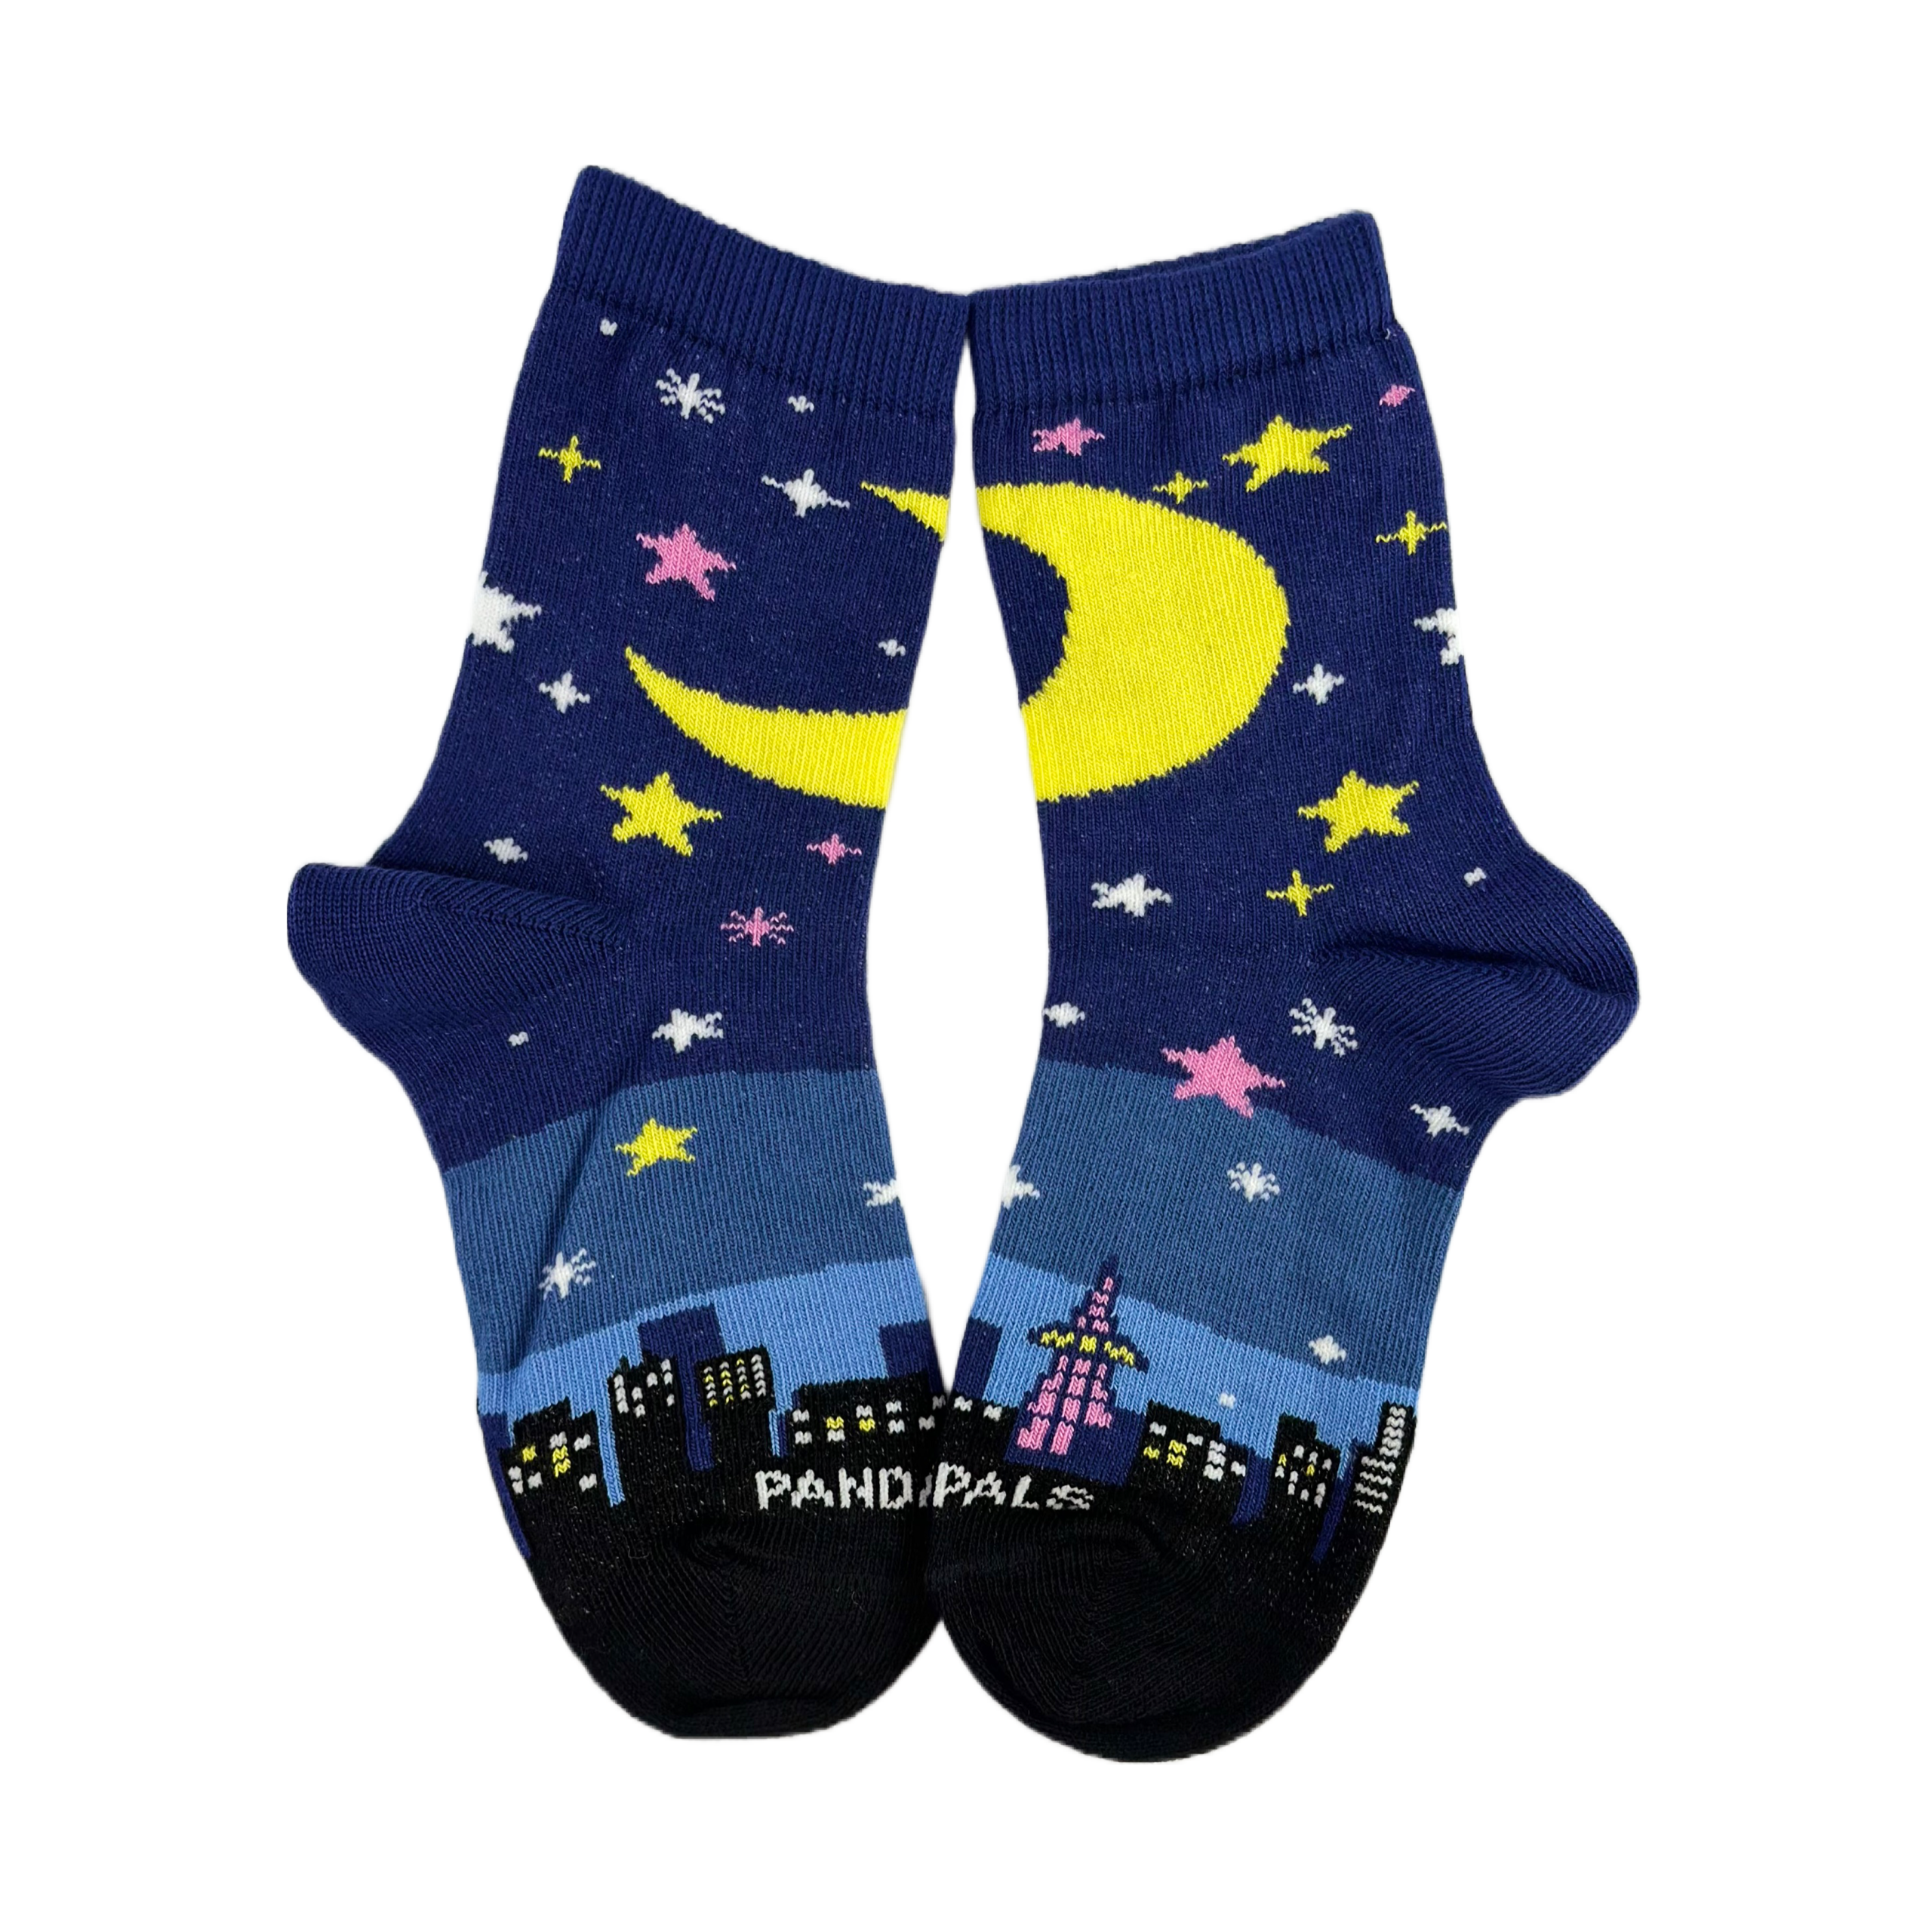 Night Sky Kids Socks from the Sock Panda (Age 3-7)